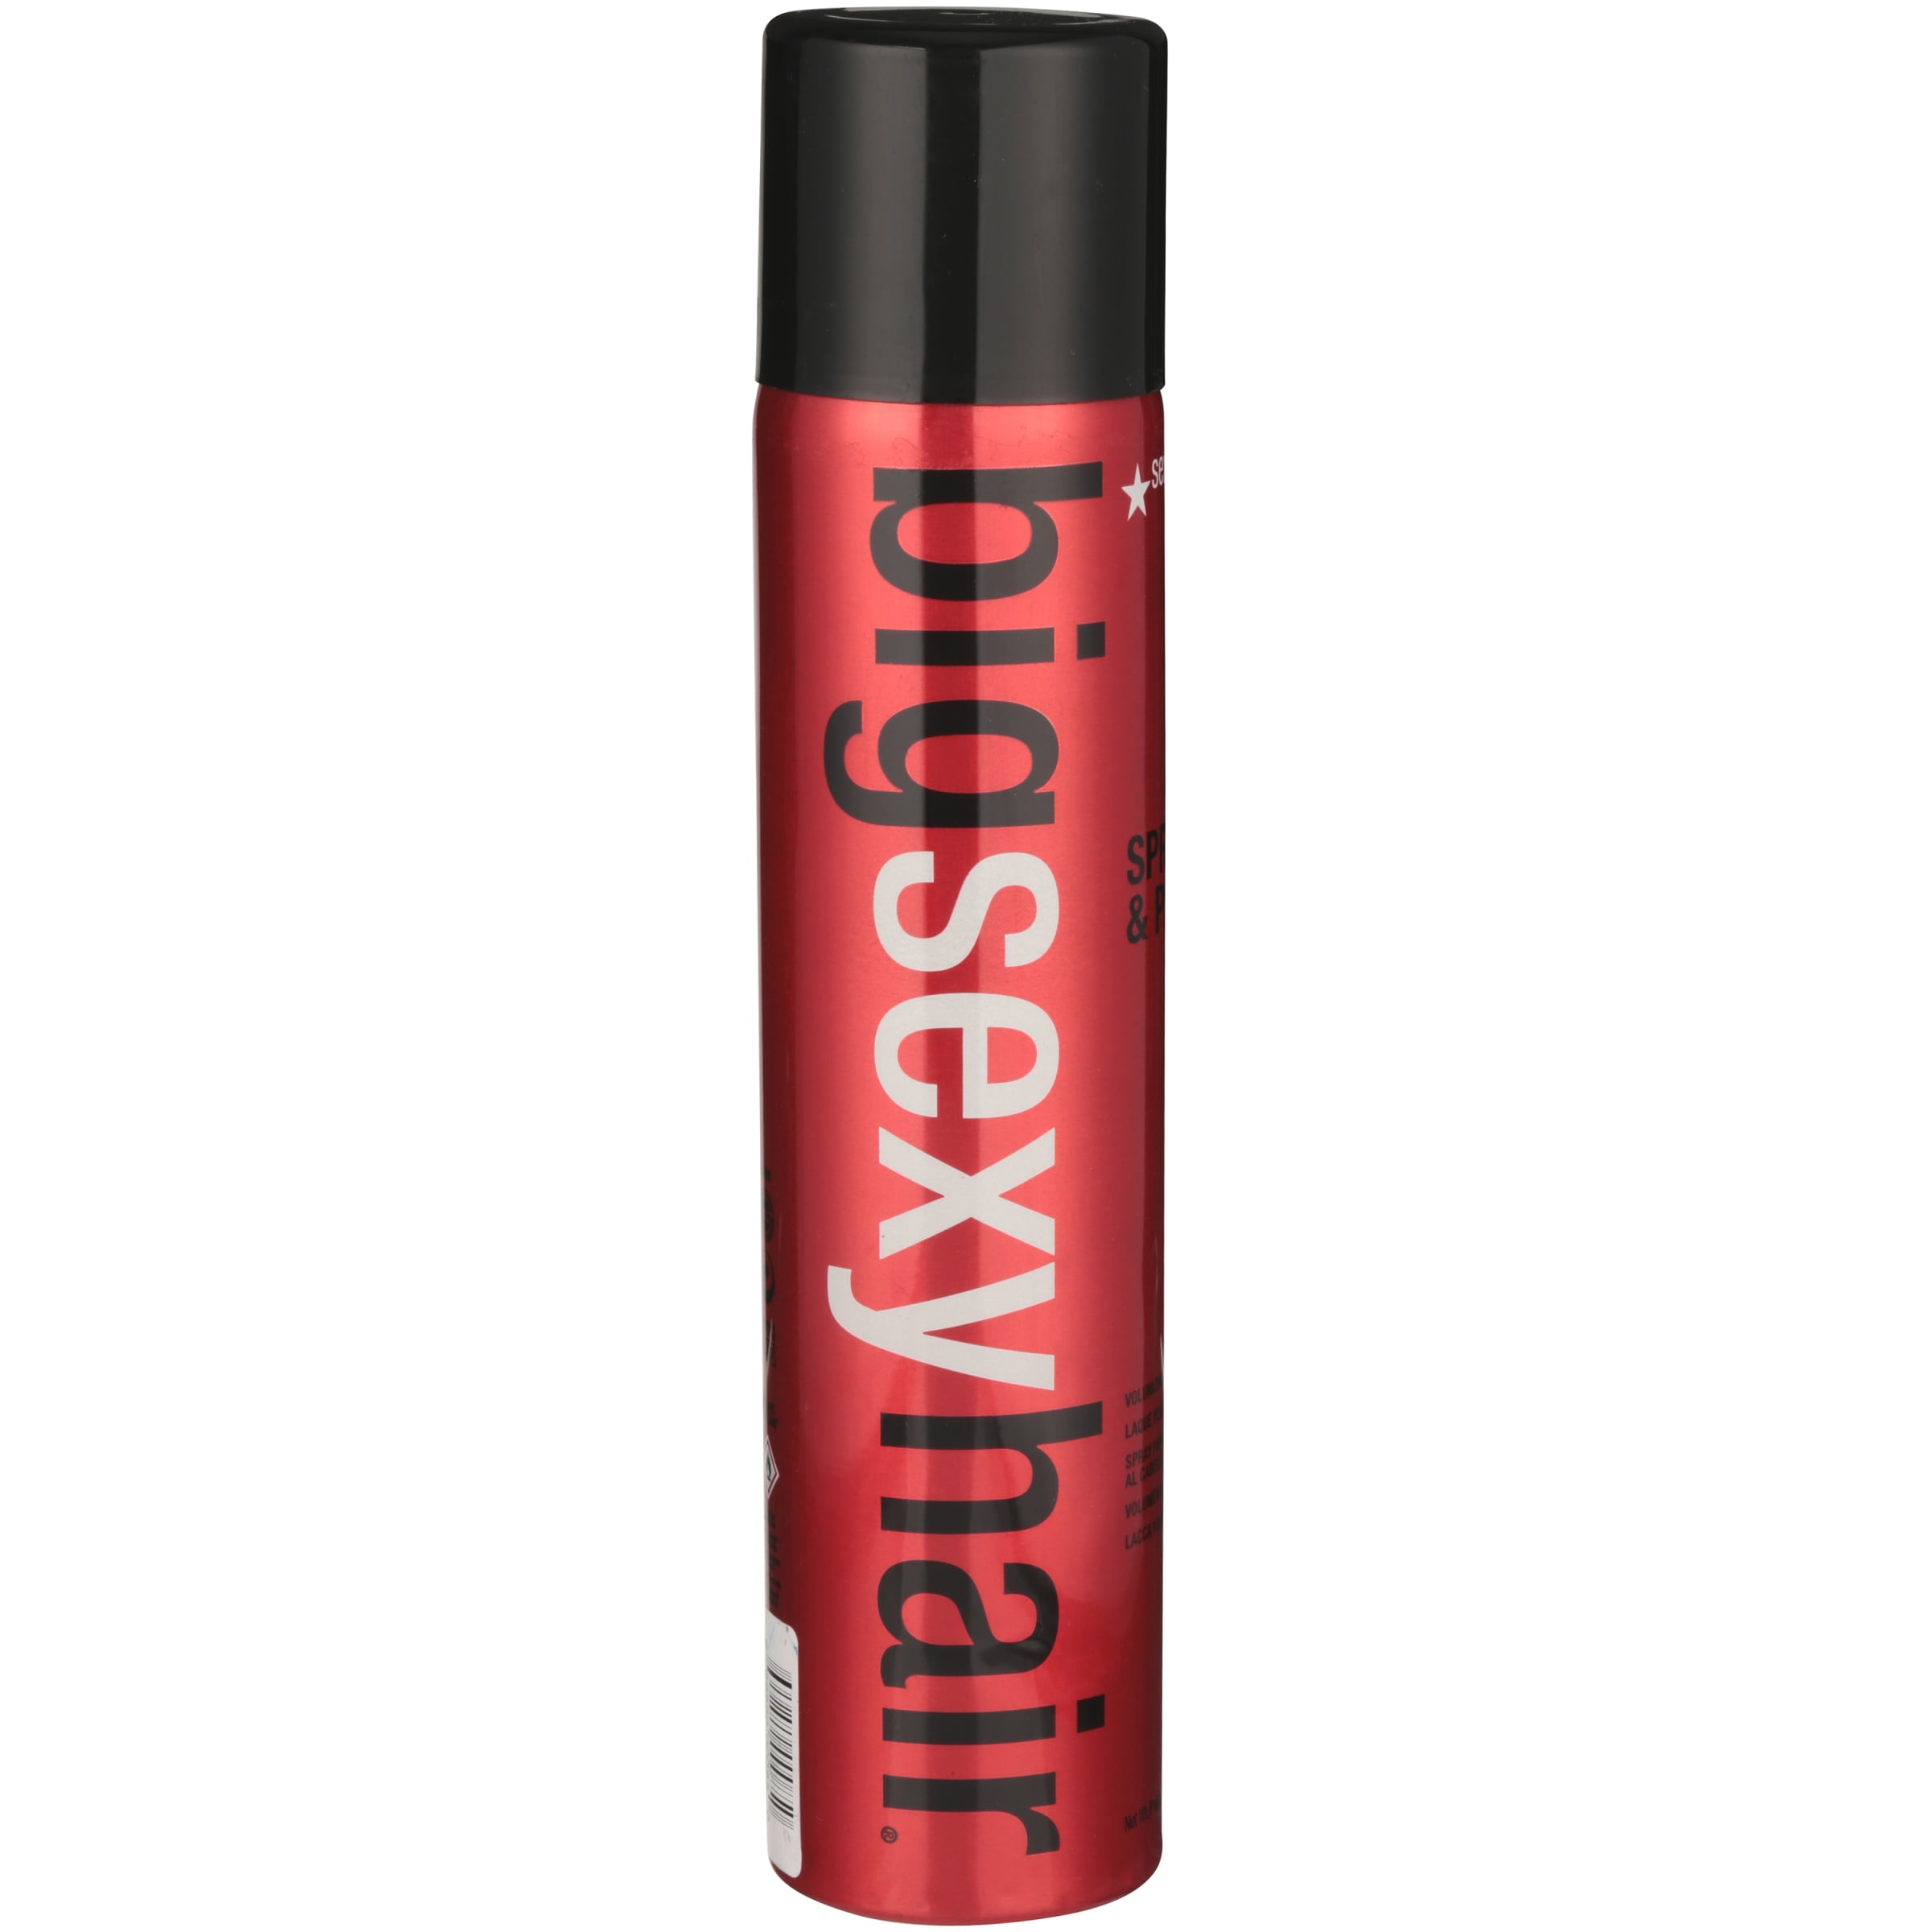 Big Sexy Hair Spray and Play Volumizing Hairspray 10 oz